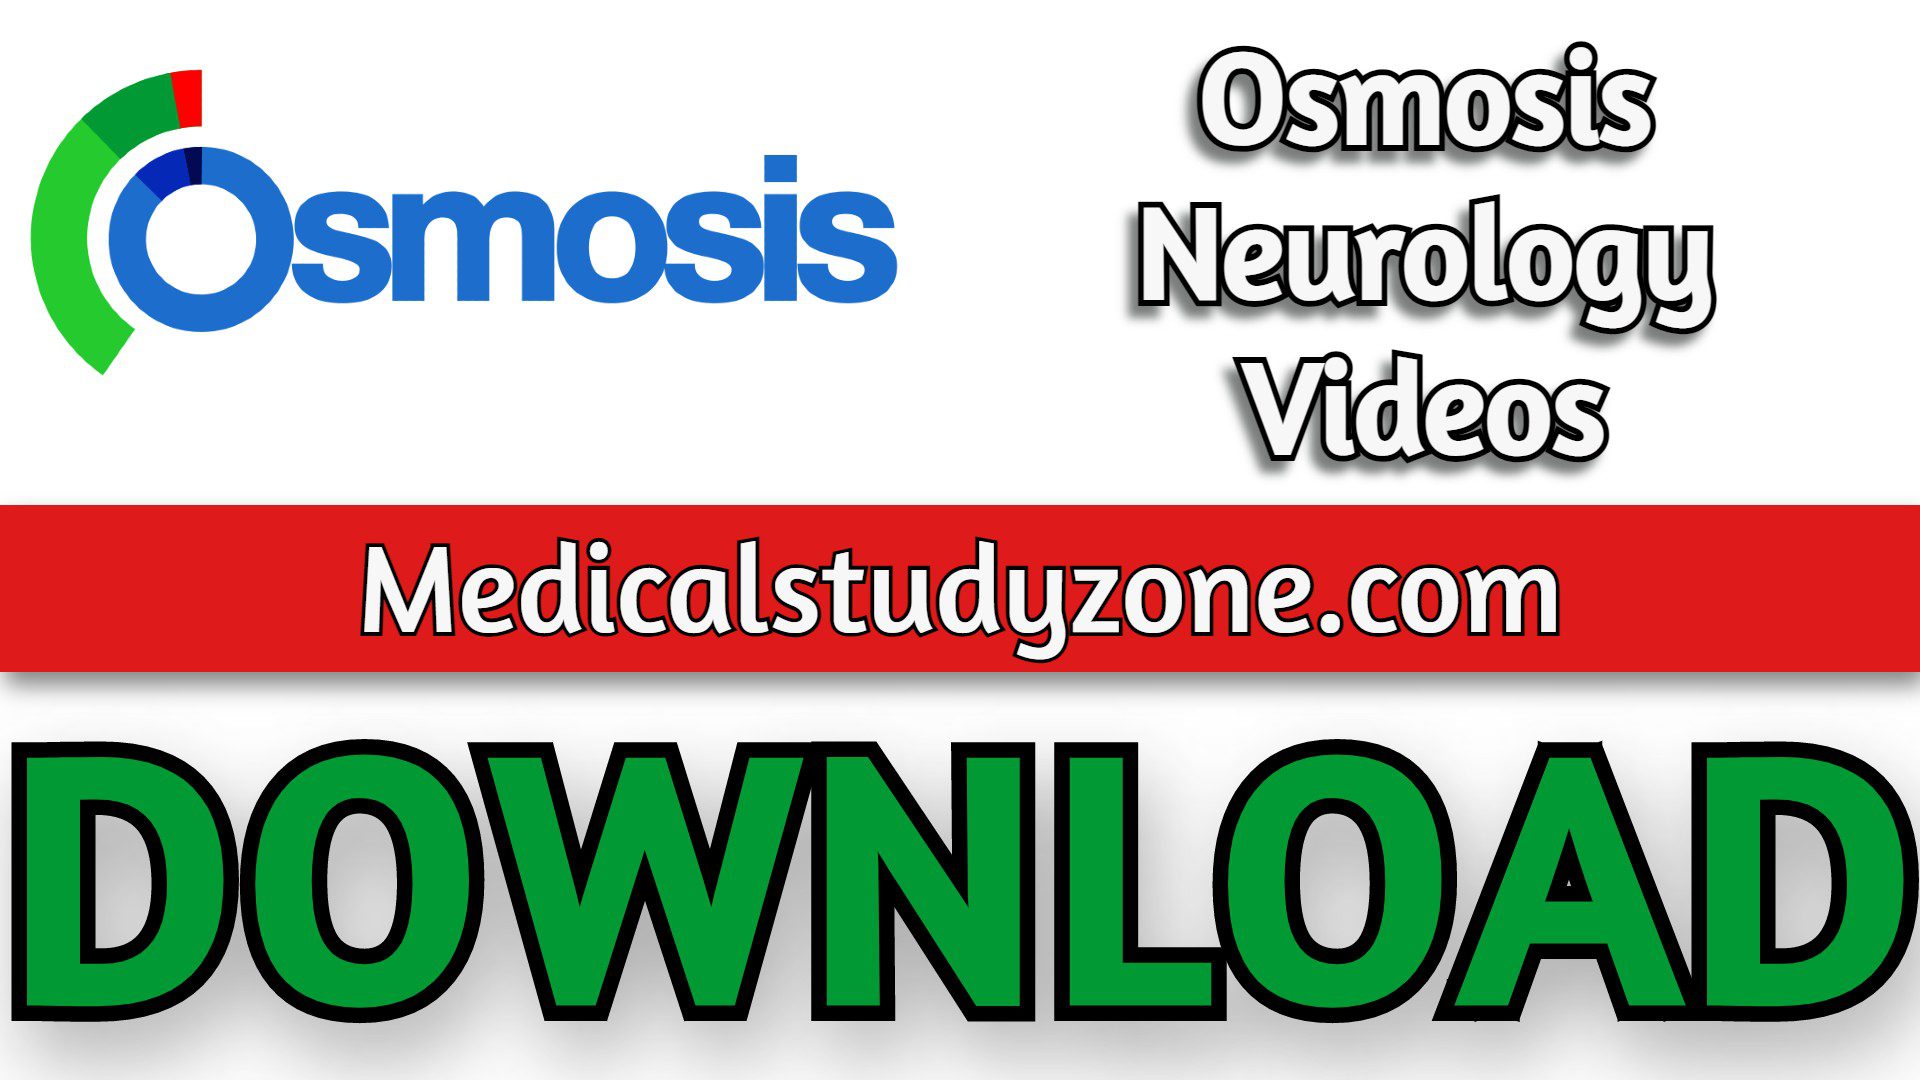 Osmosis Neurology Videos 2023 Free Download